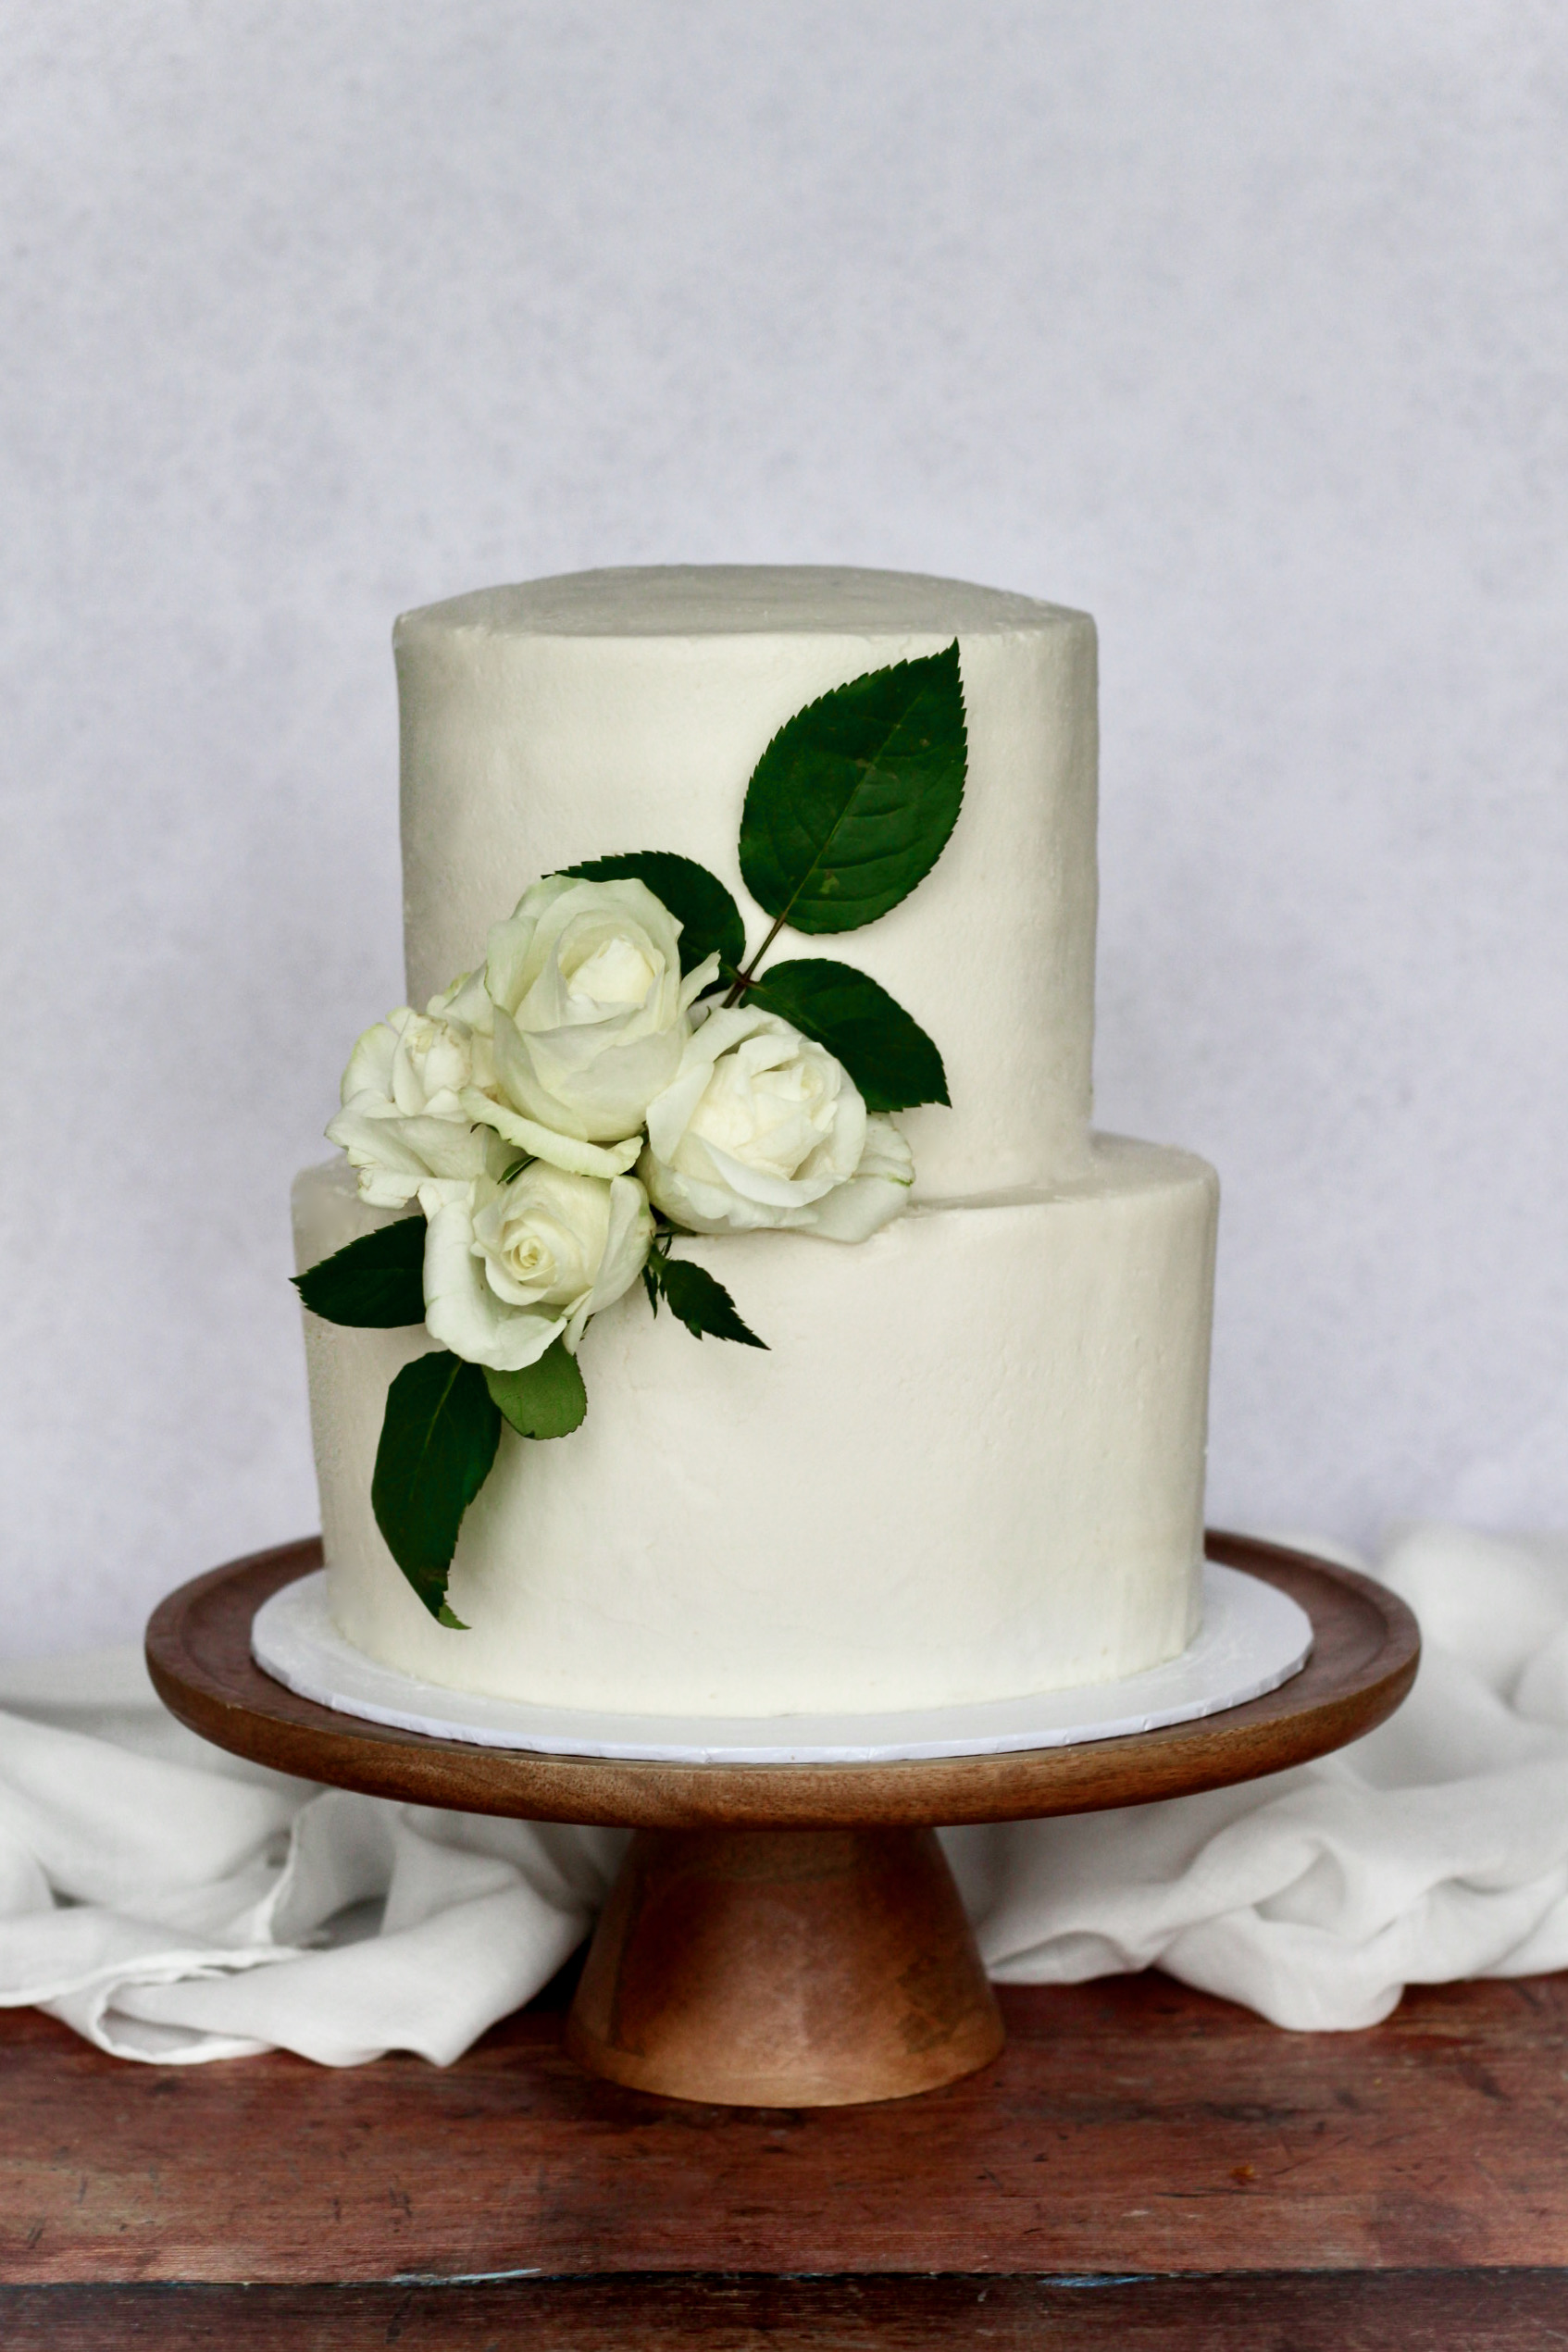 Vegan wedding cake with real flowers